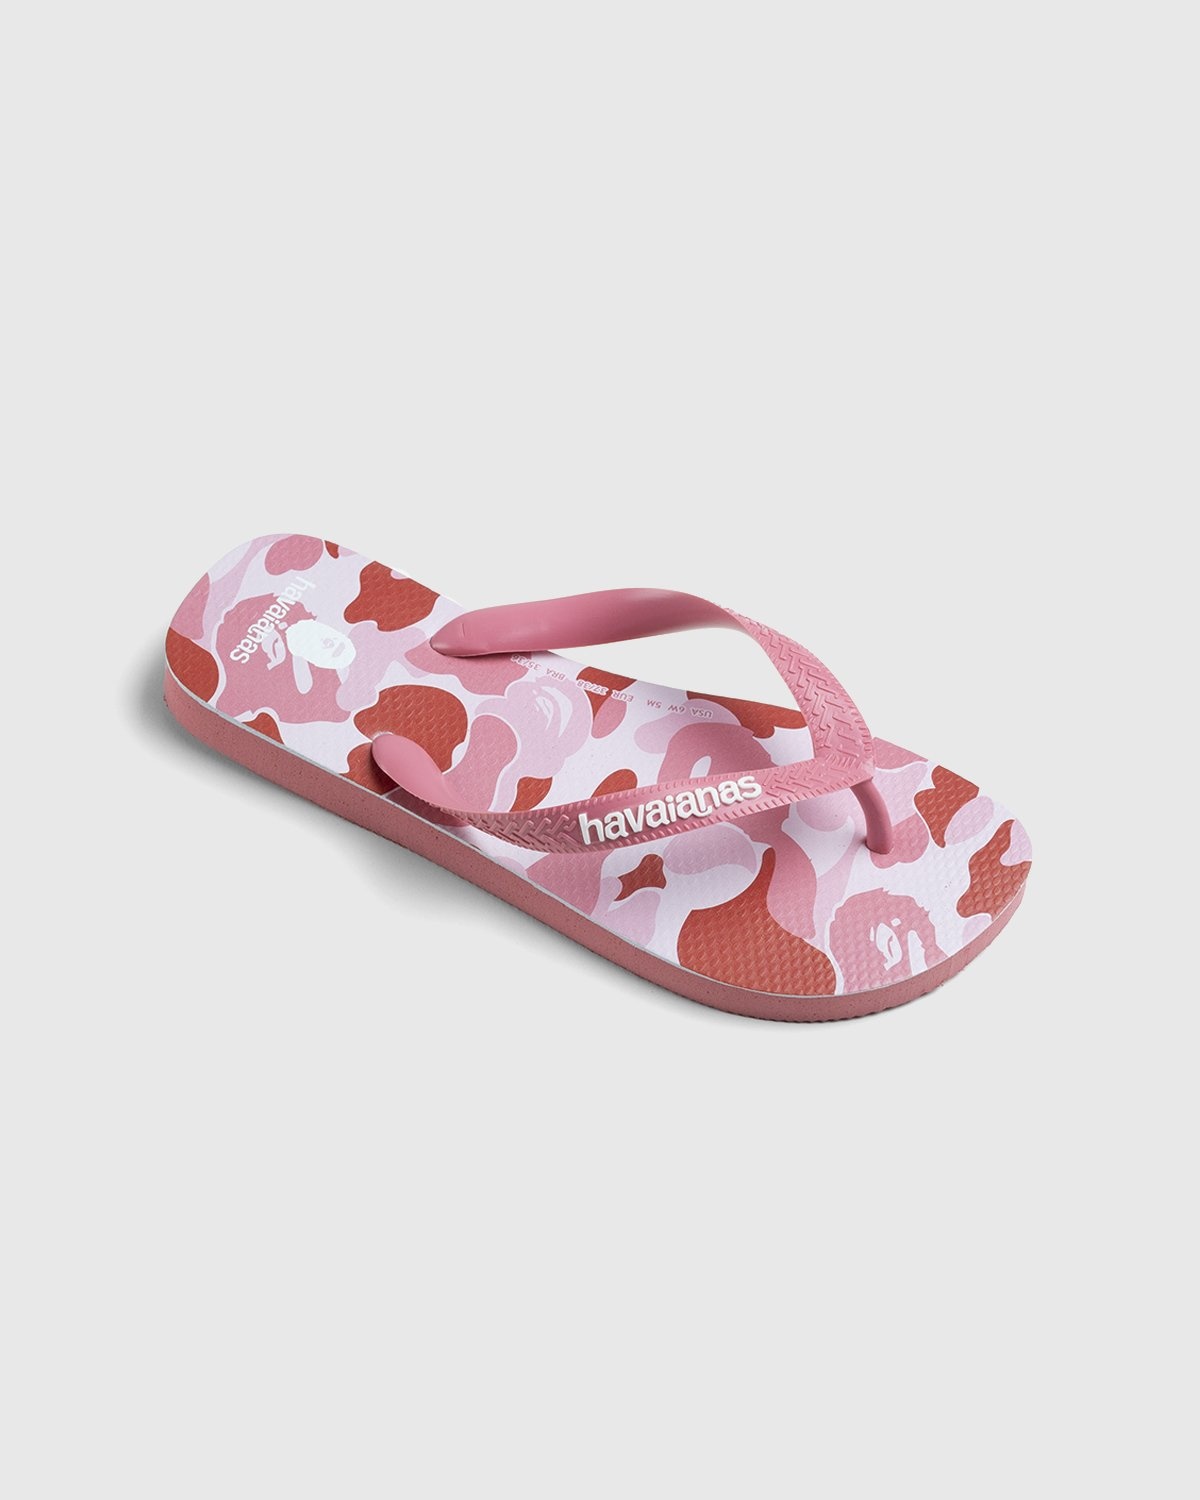 BAPE – Top Pink - Flip Flops - Pink - Image 2